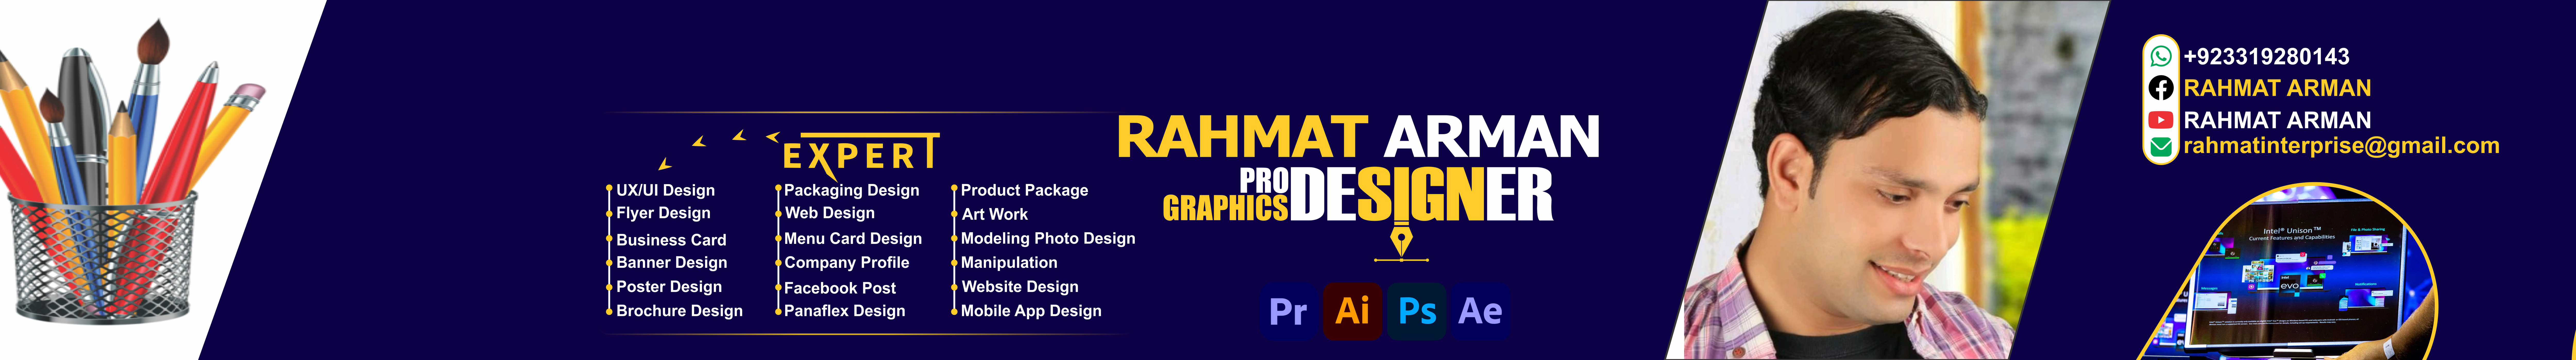 Rahmat Arman's profile banner